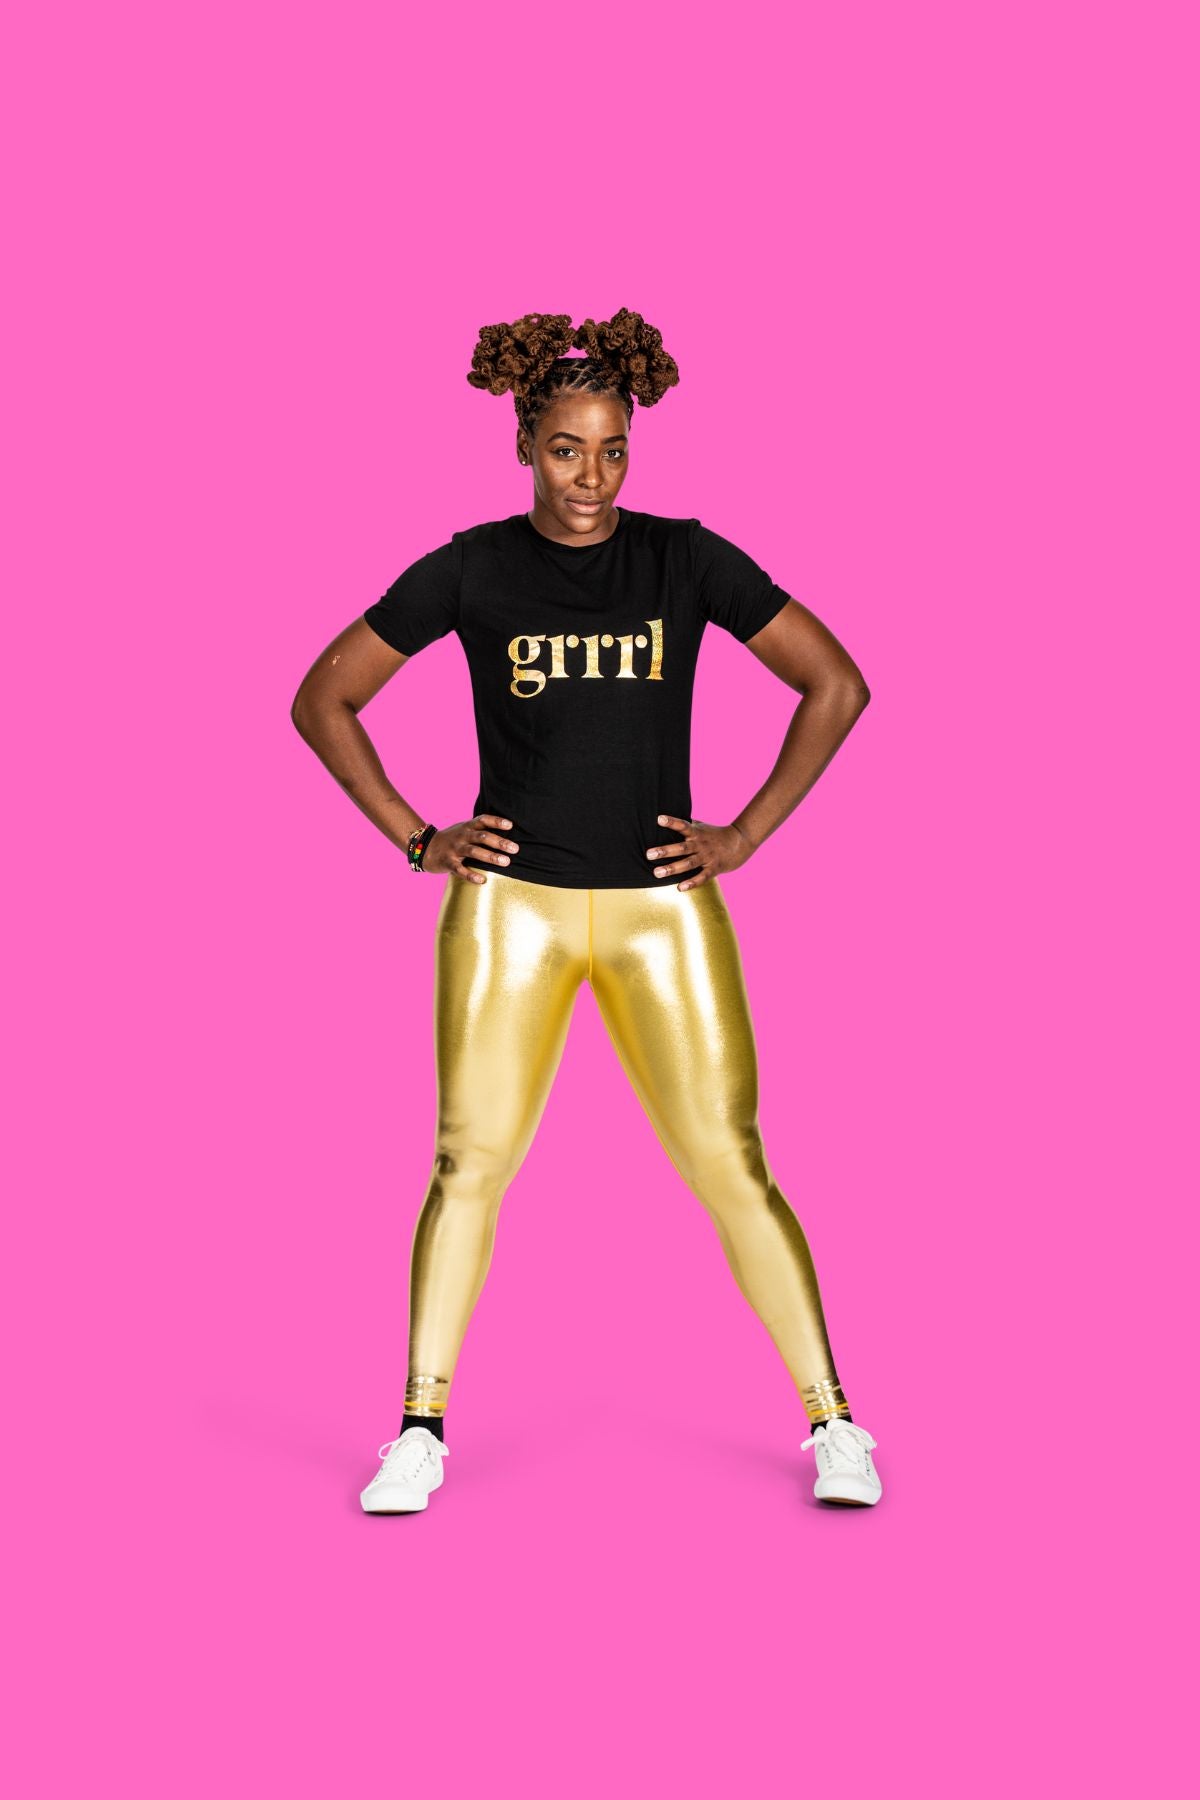 Golden Women's Workout Clothing